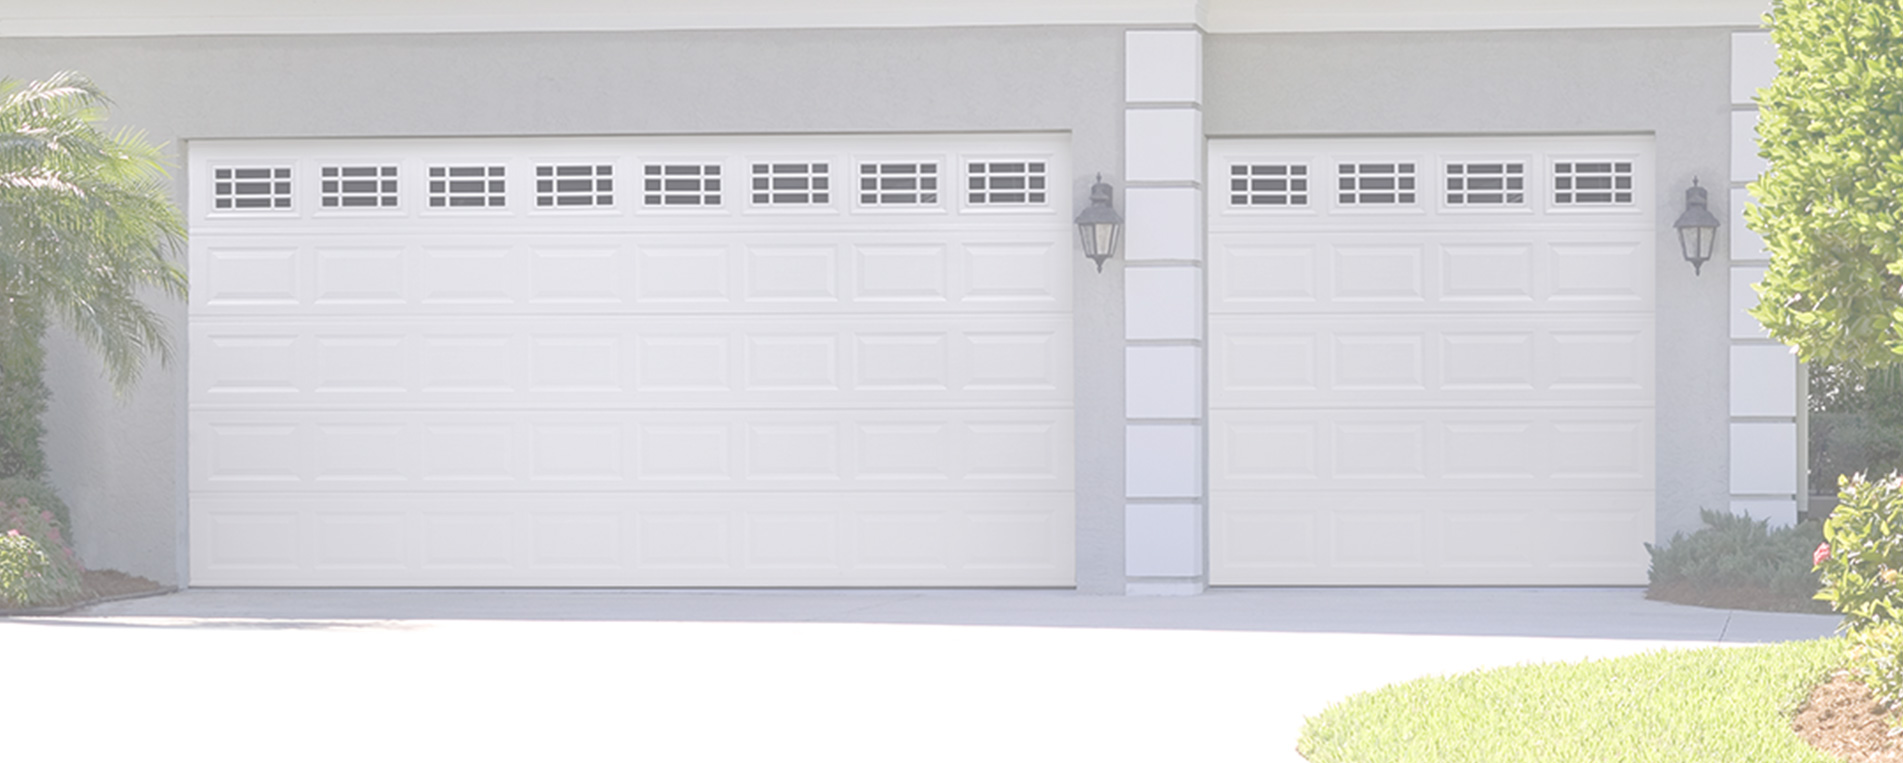 Basics About Garage Doors